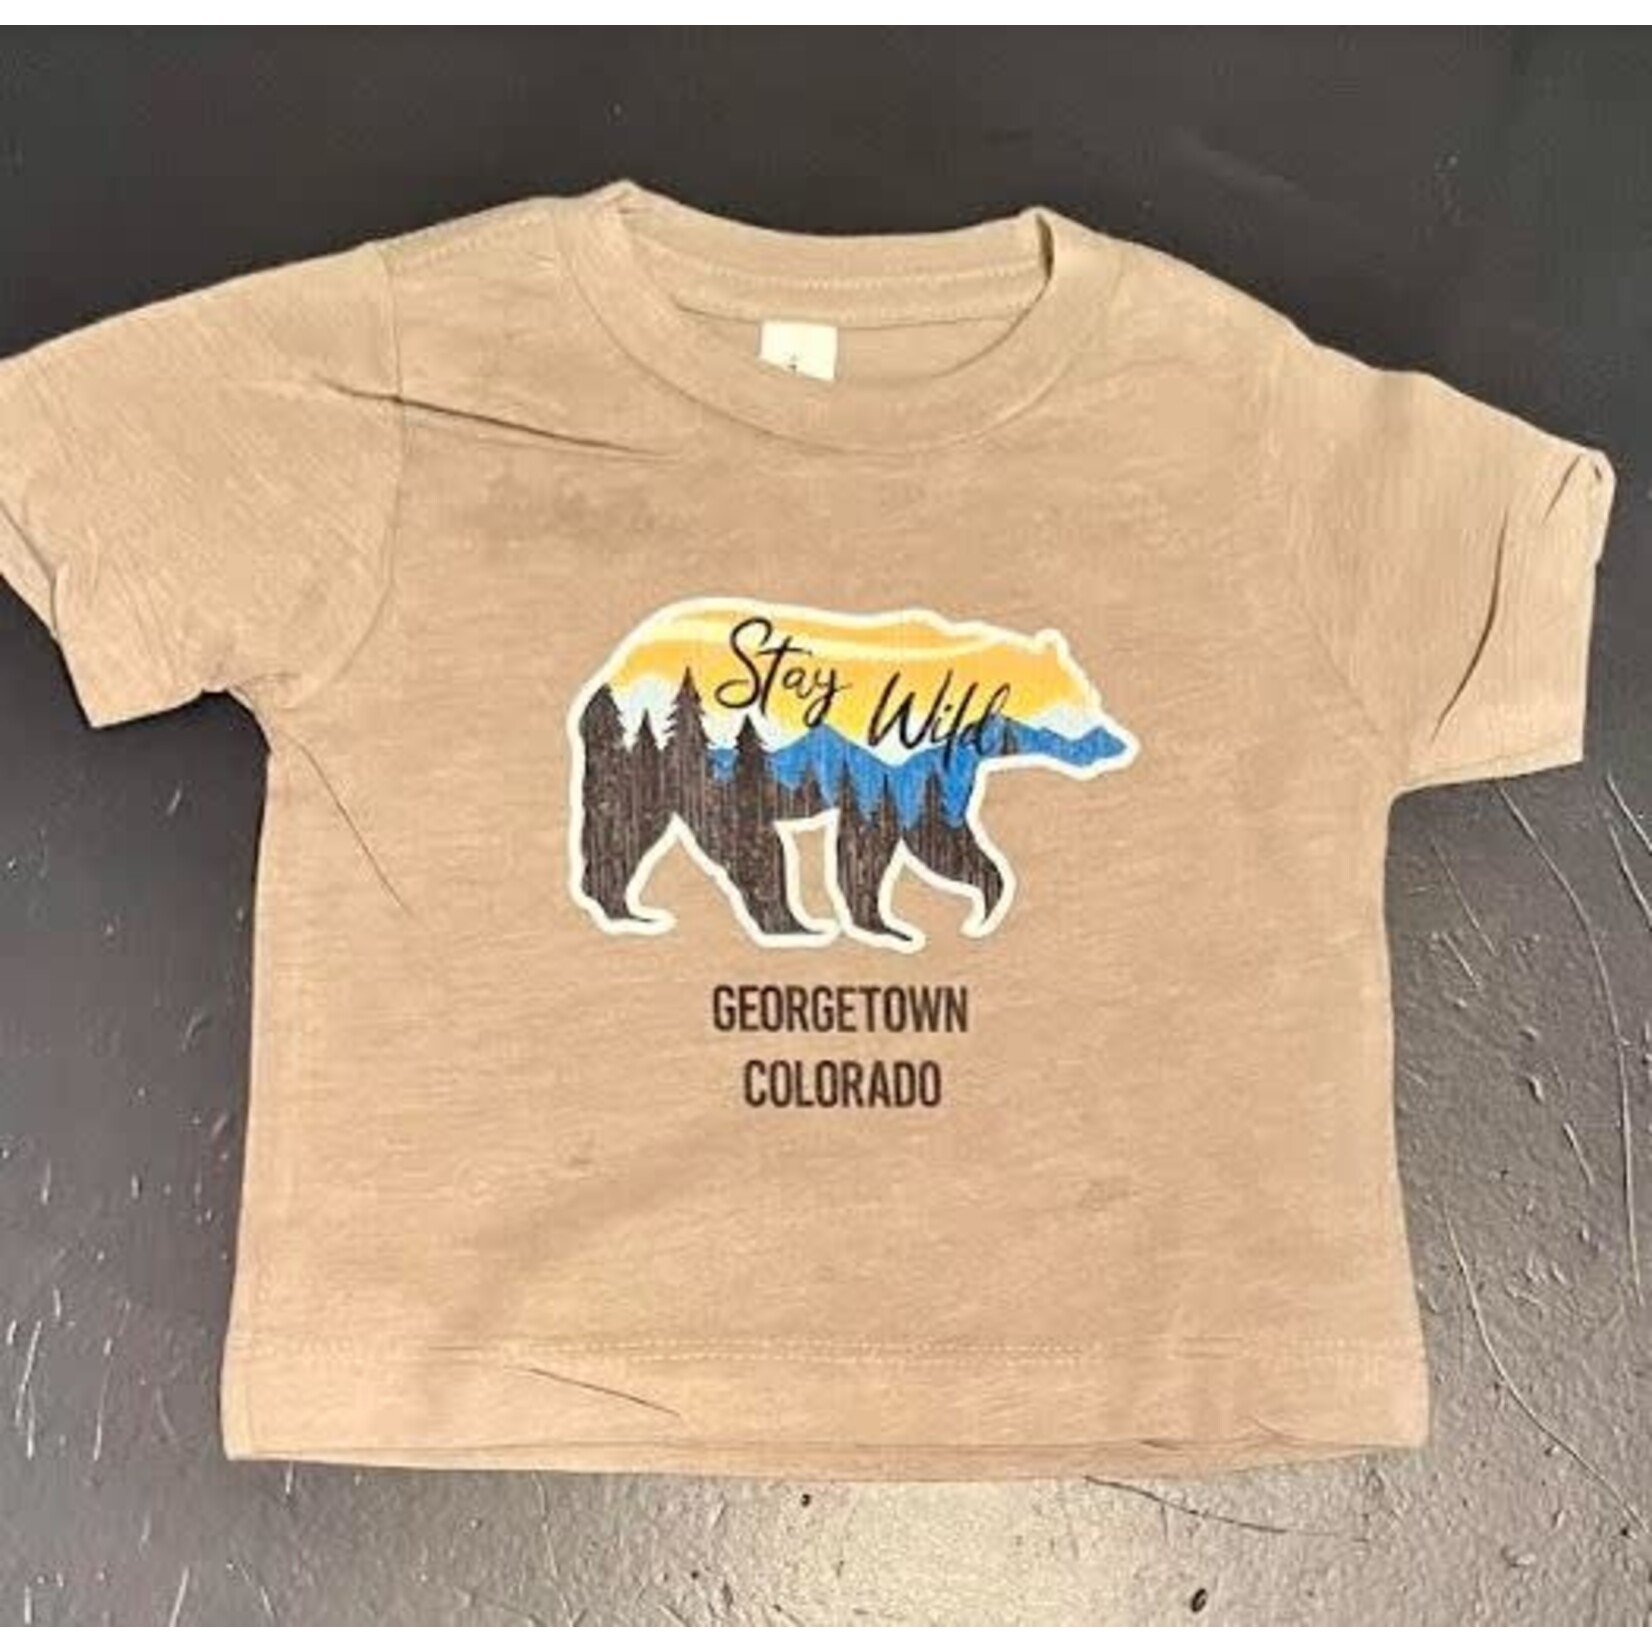 This Joyful Home TJH GTown Baby Stay Wild T-Shirt